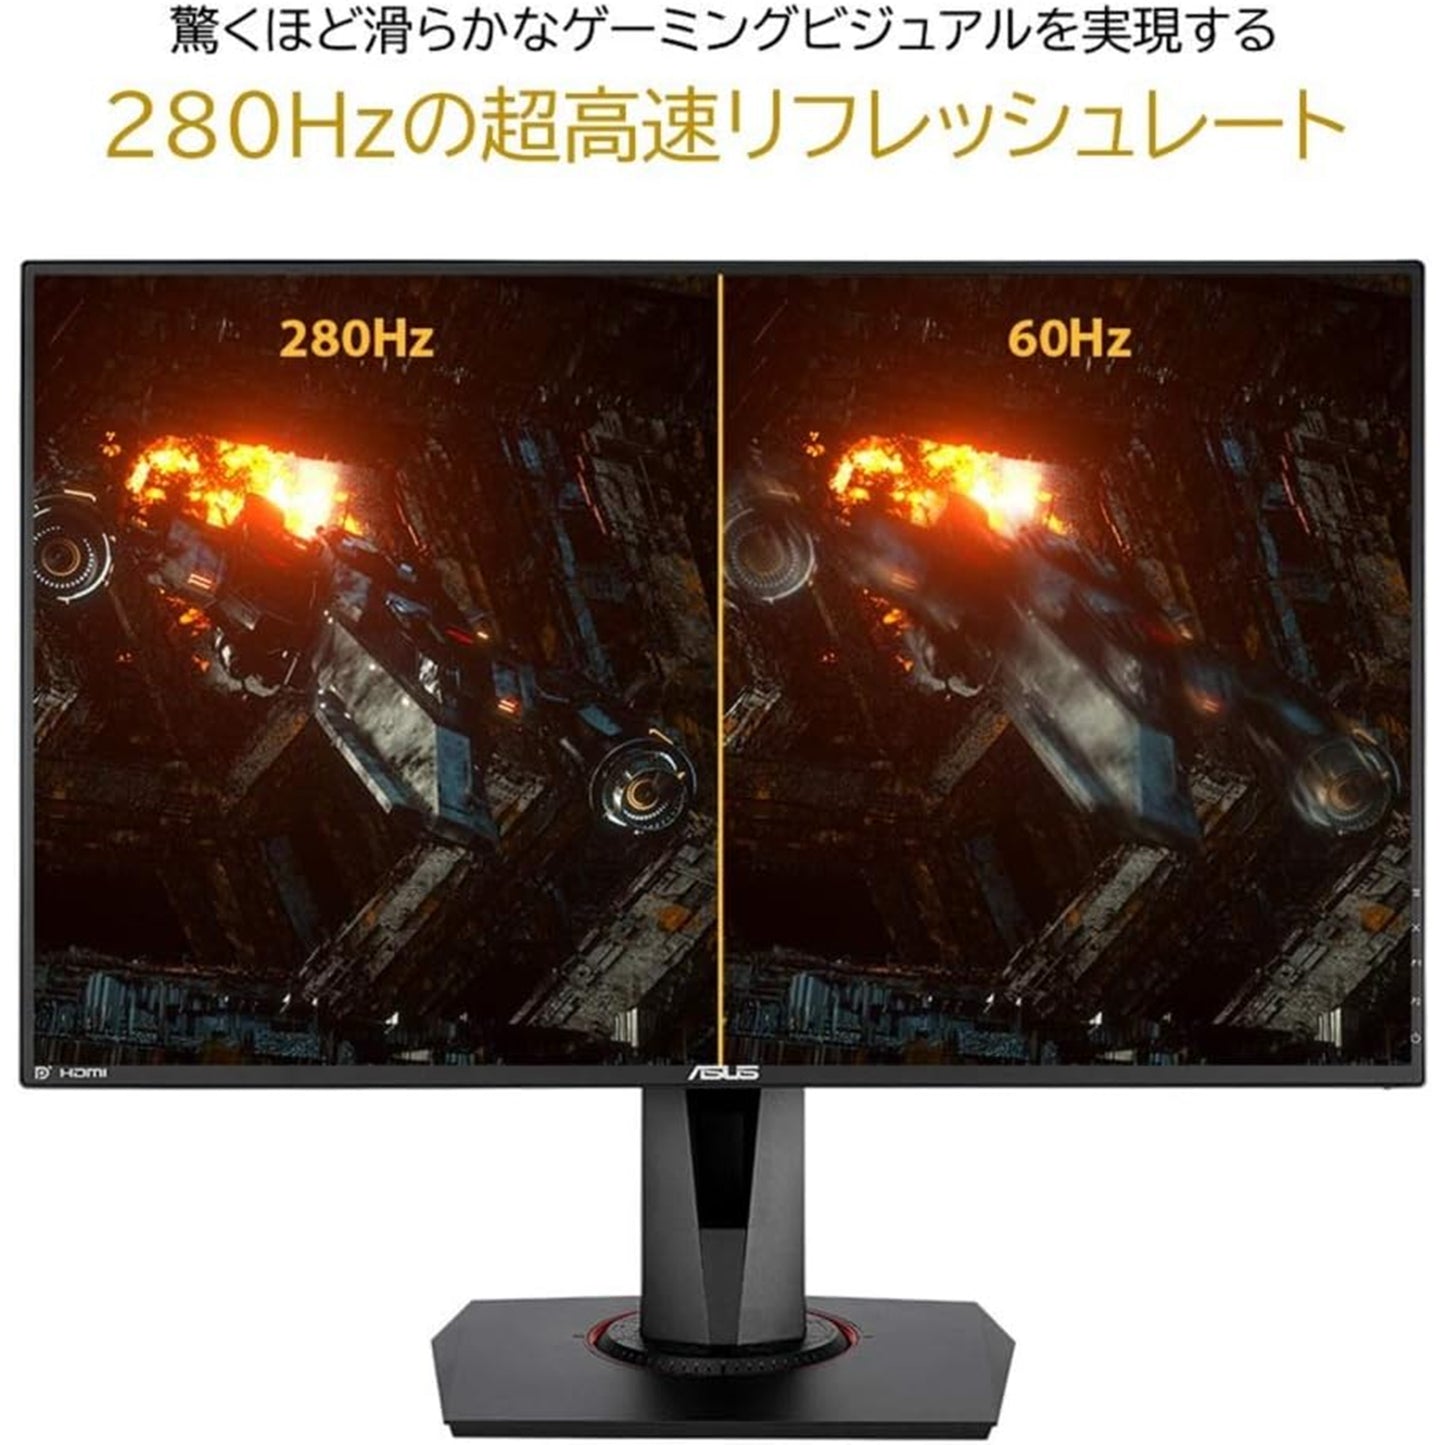 Asus Gaming VG279QM شاشة LCD للألعاب 27 بوصة Full HD WLED - 16:9 - أسود